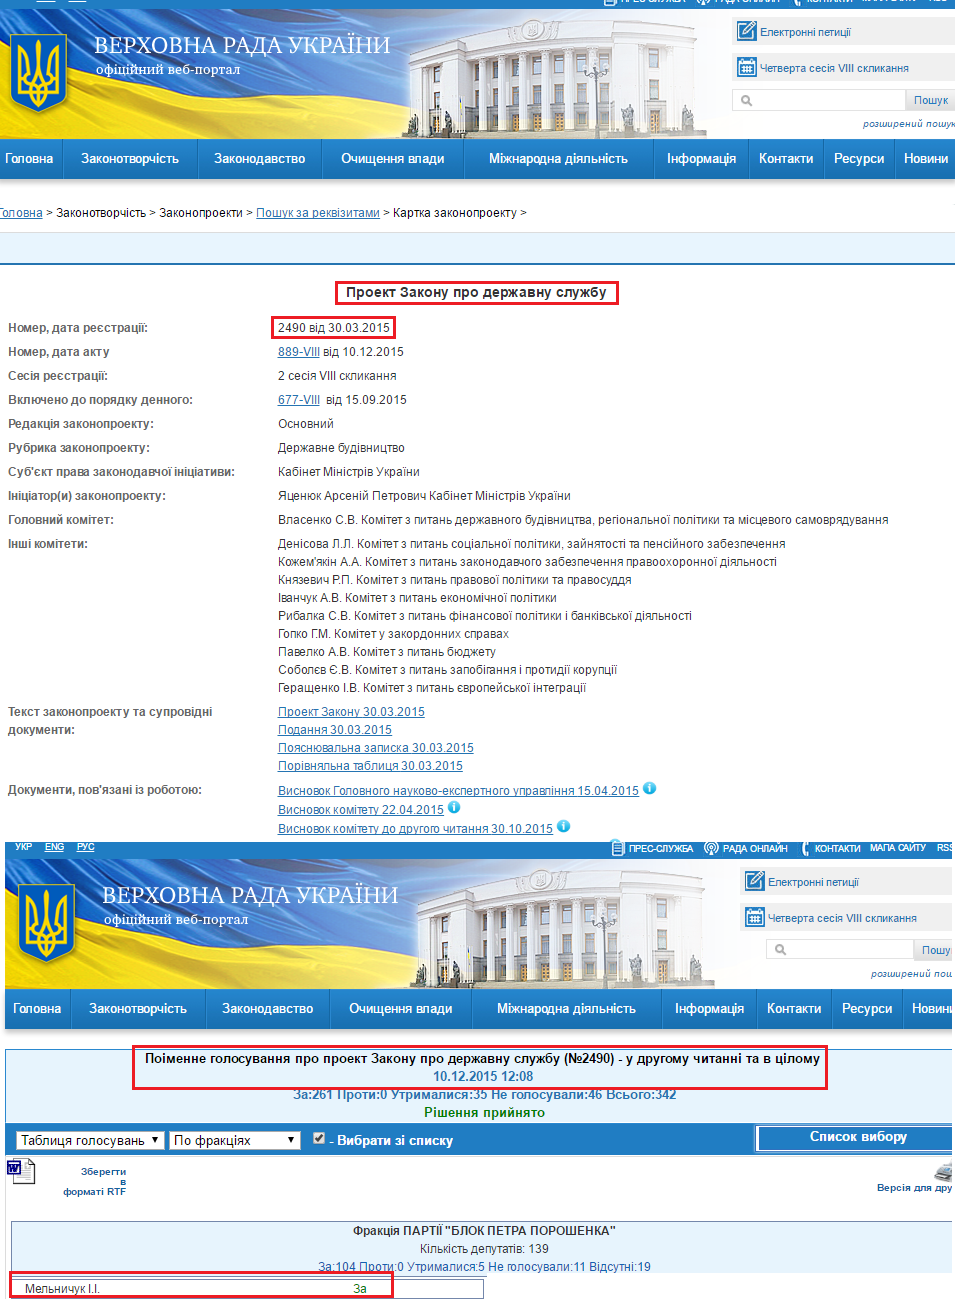 http://w1.c1.rada.gov.ua/pls/zweb2/webproc4_2?id=&pf3516=2490&skl=9